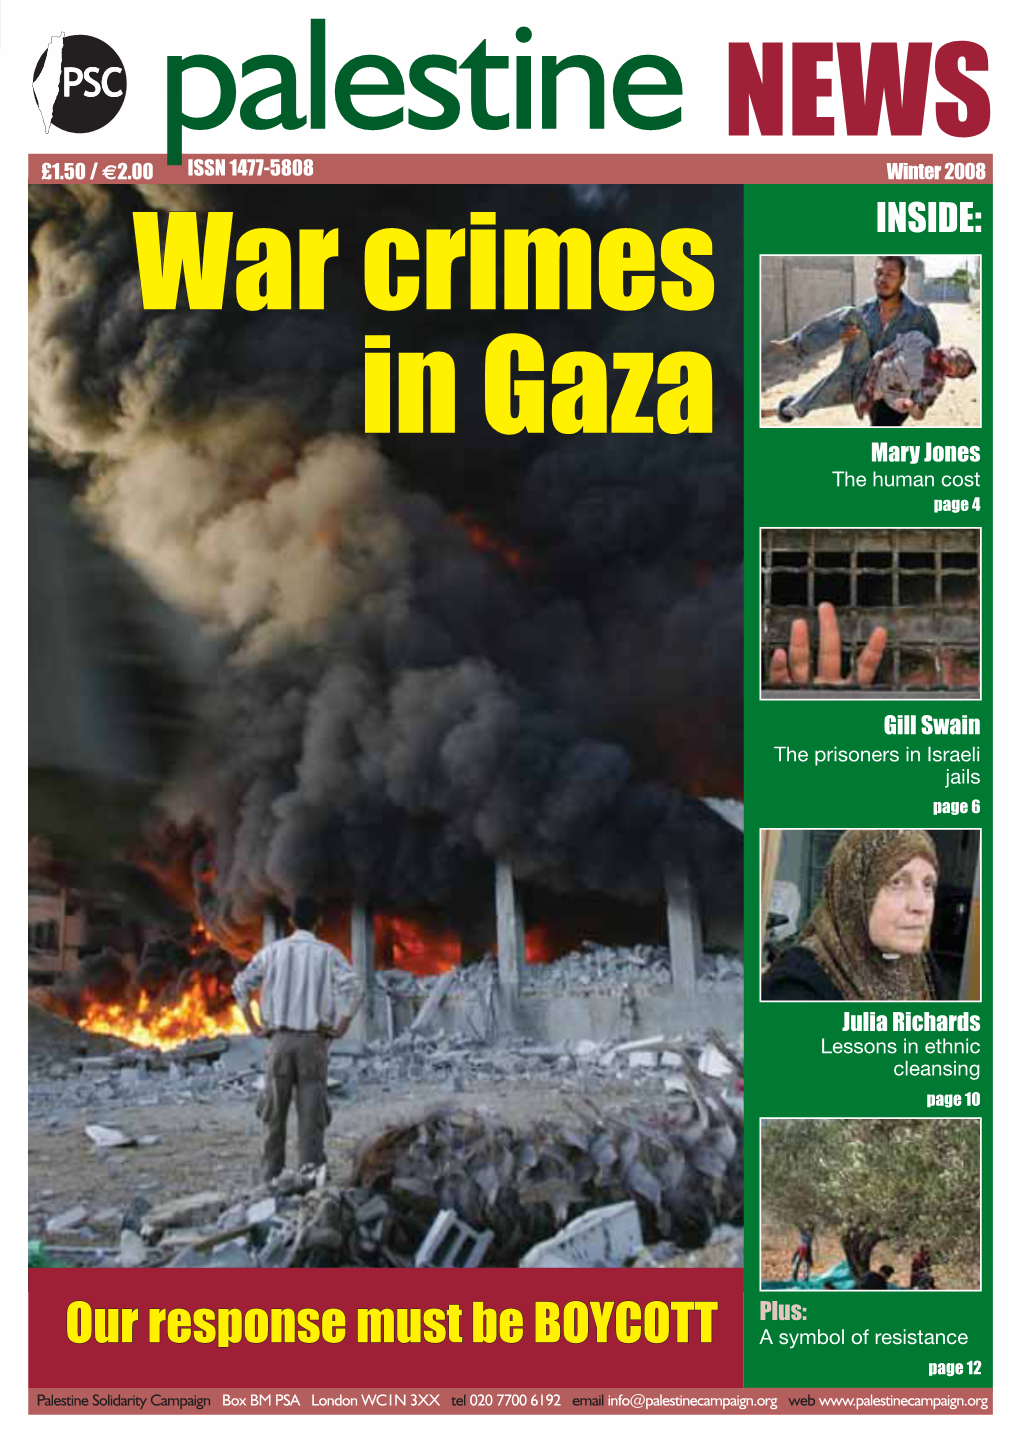 Palestine NEWS 1 Palestine NEWS £1.50 / €2.00 ISSN 1477-5808 Winter 2008 INSIDE: Wwarar Crimescrimes Iinn Gazagaza Mary Jones the Human Cost Page 4